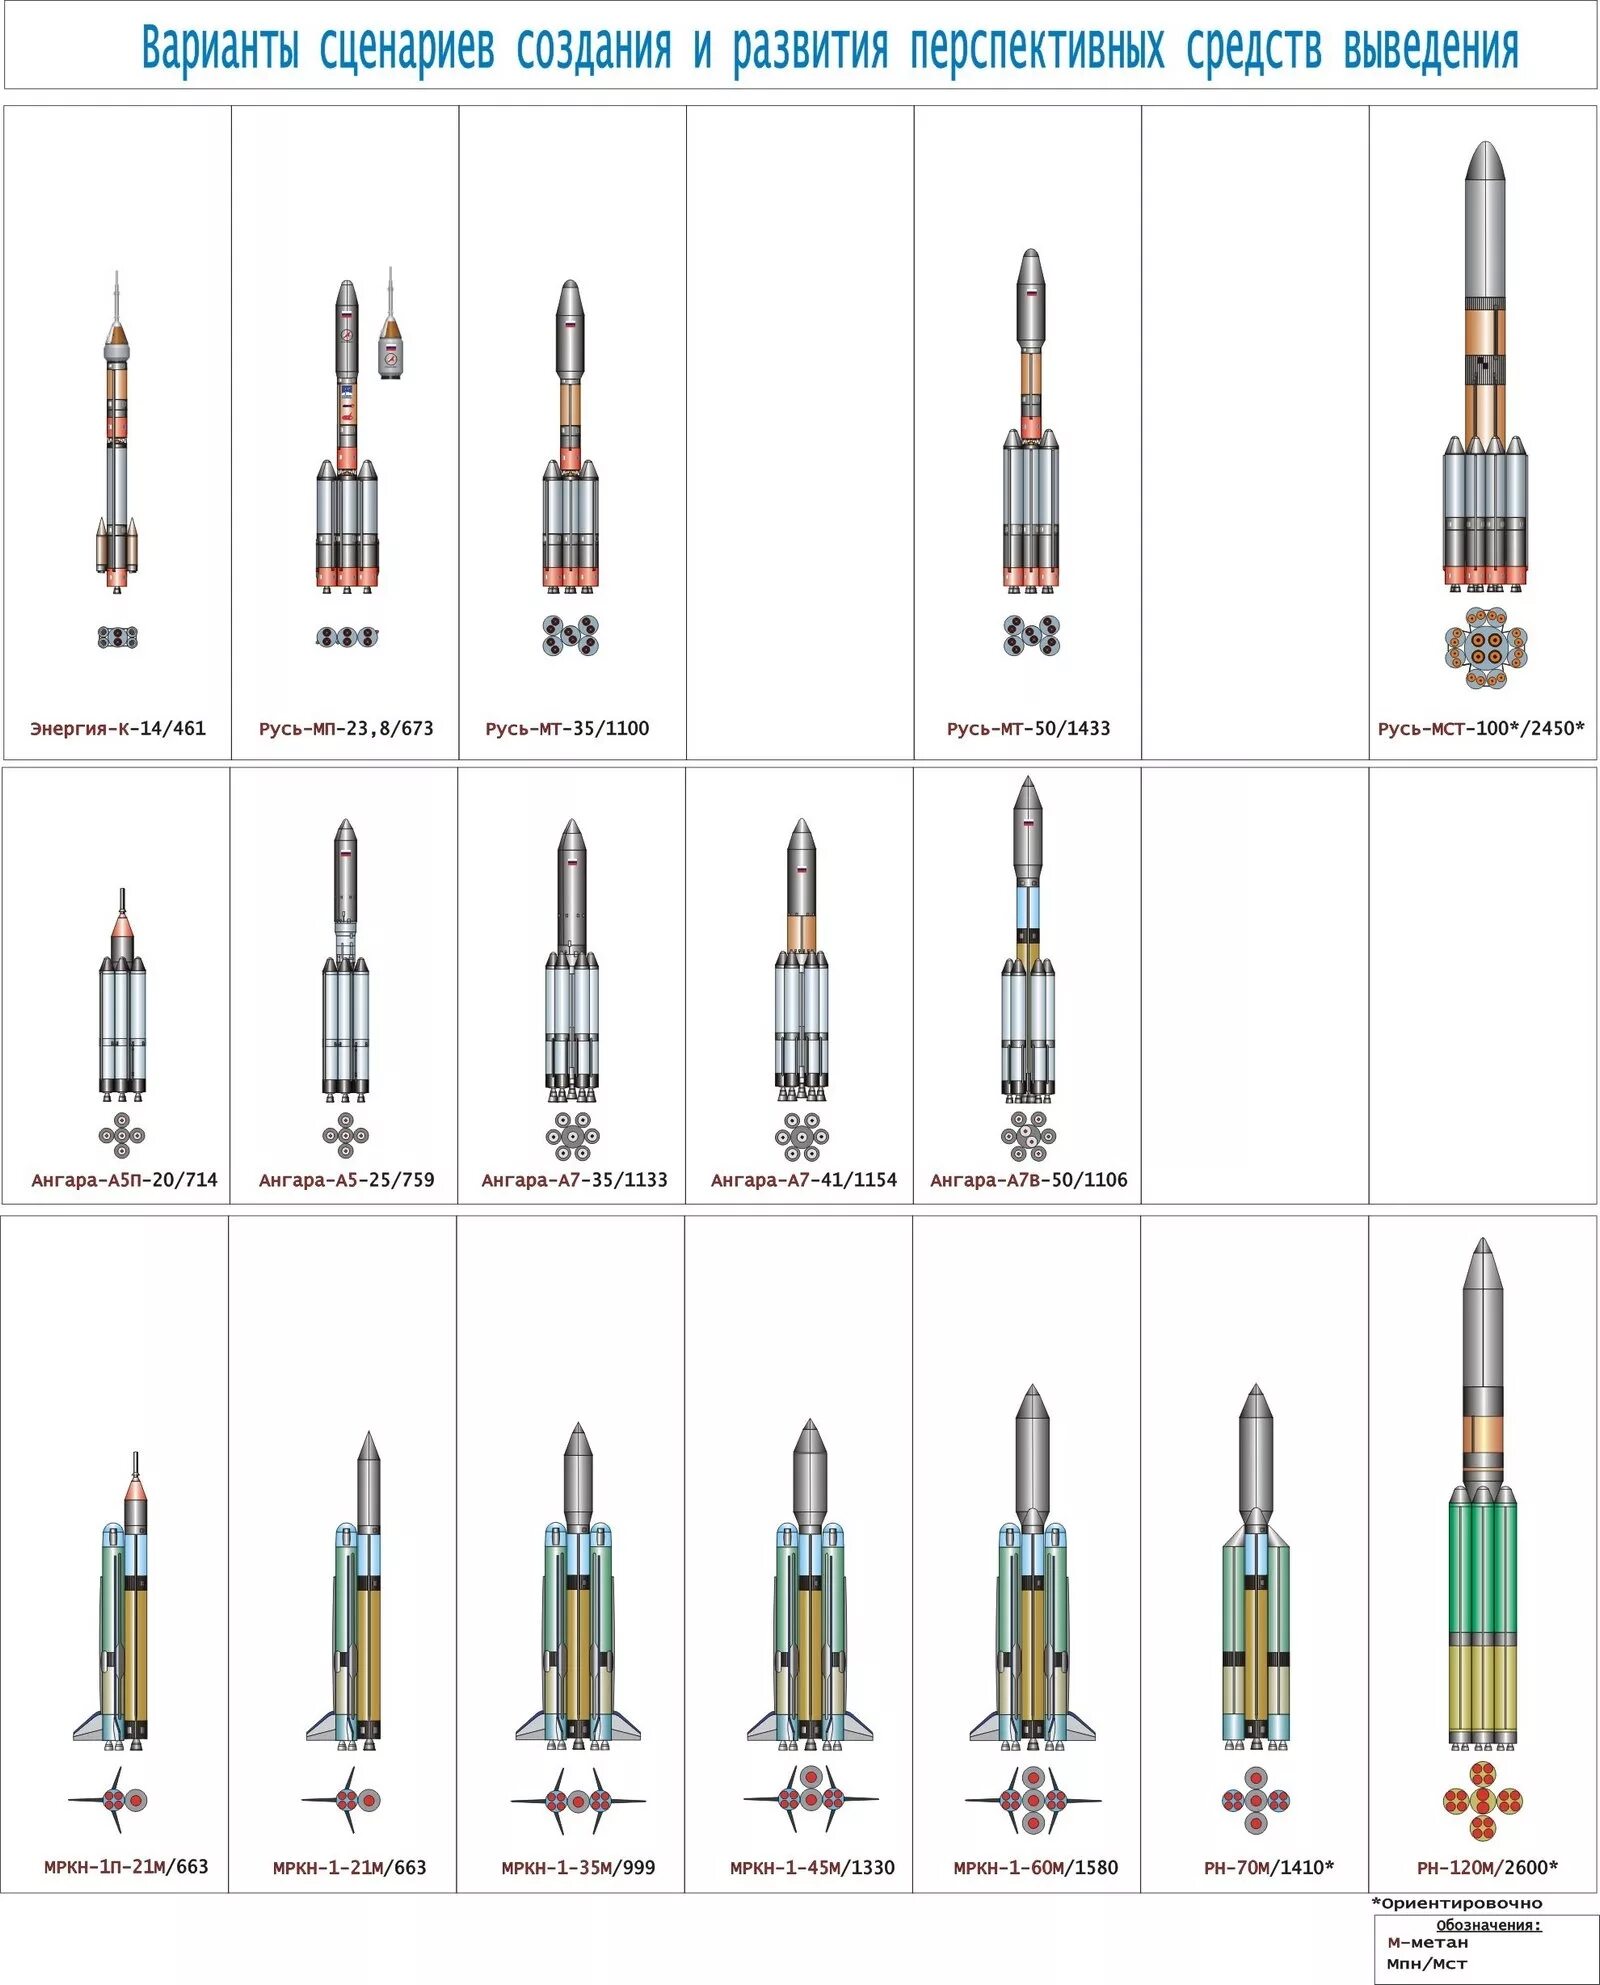 Ангара а5 чертеж. Ракета-носитель "Ангара-а5". Ур-700 ракета-носитель. Ракета Ангара а5 чертеж. Ангара а5 размеры